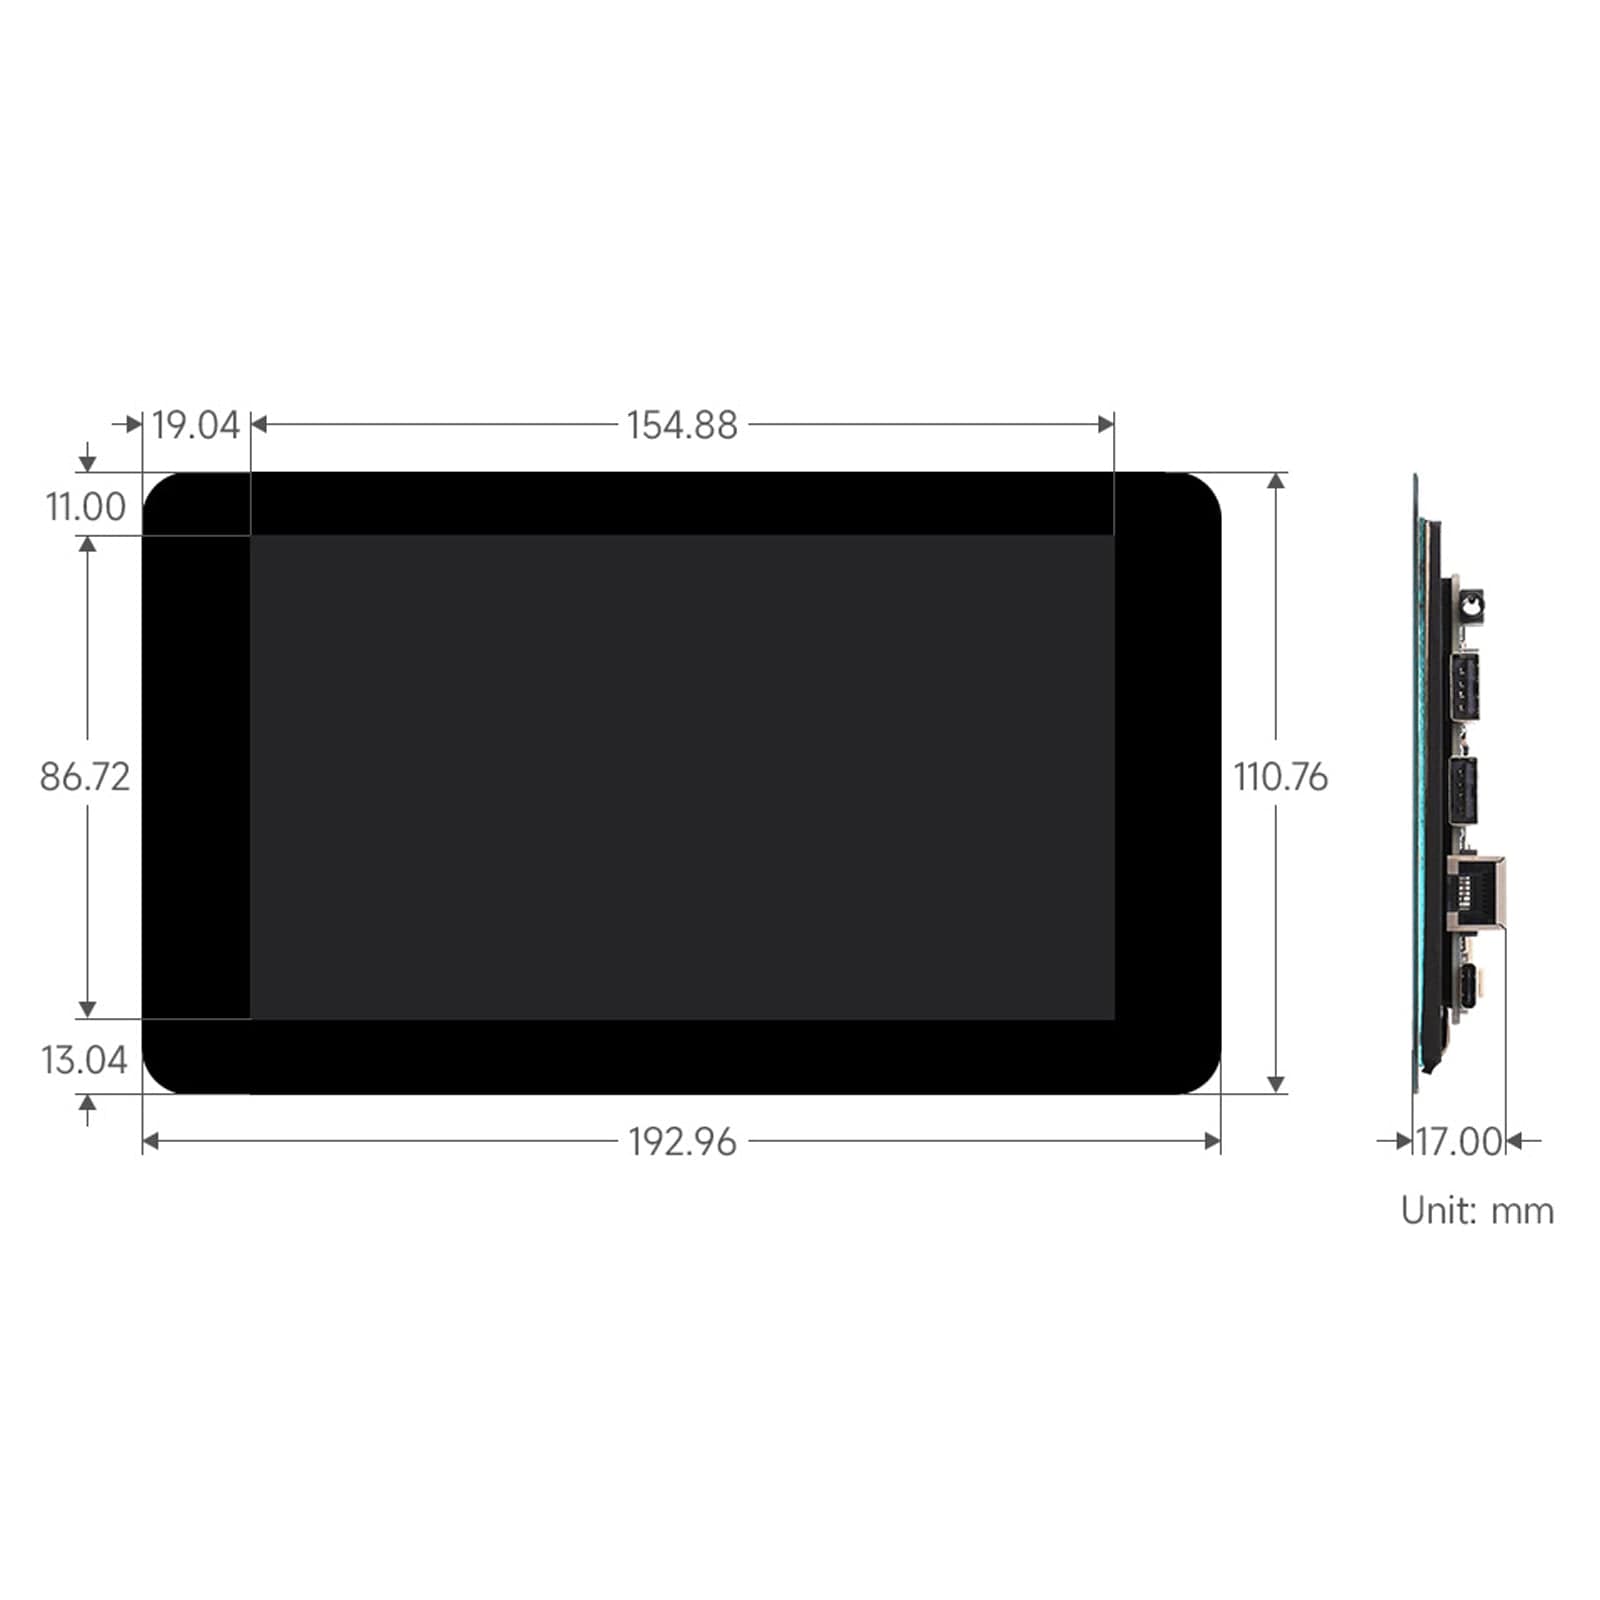 7″ Touch Display Kit For Raspberry Pi Zero - The Pi Hut